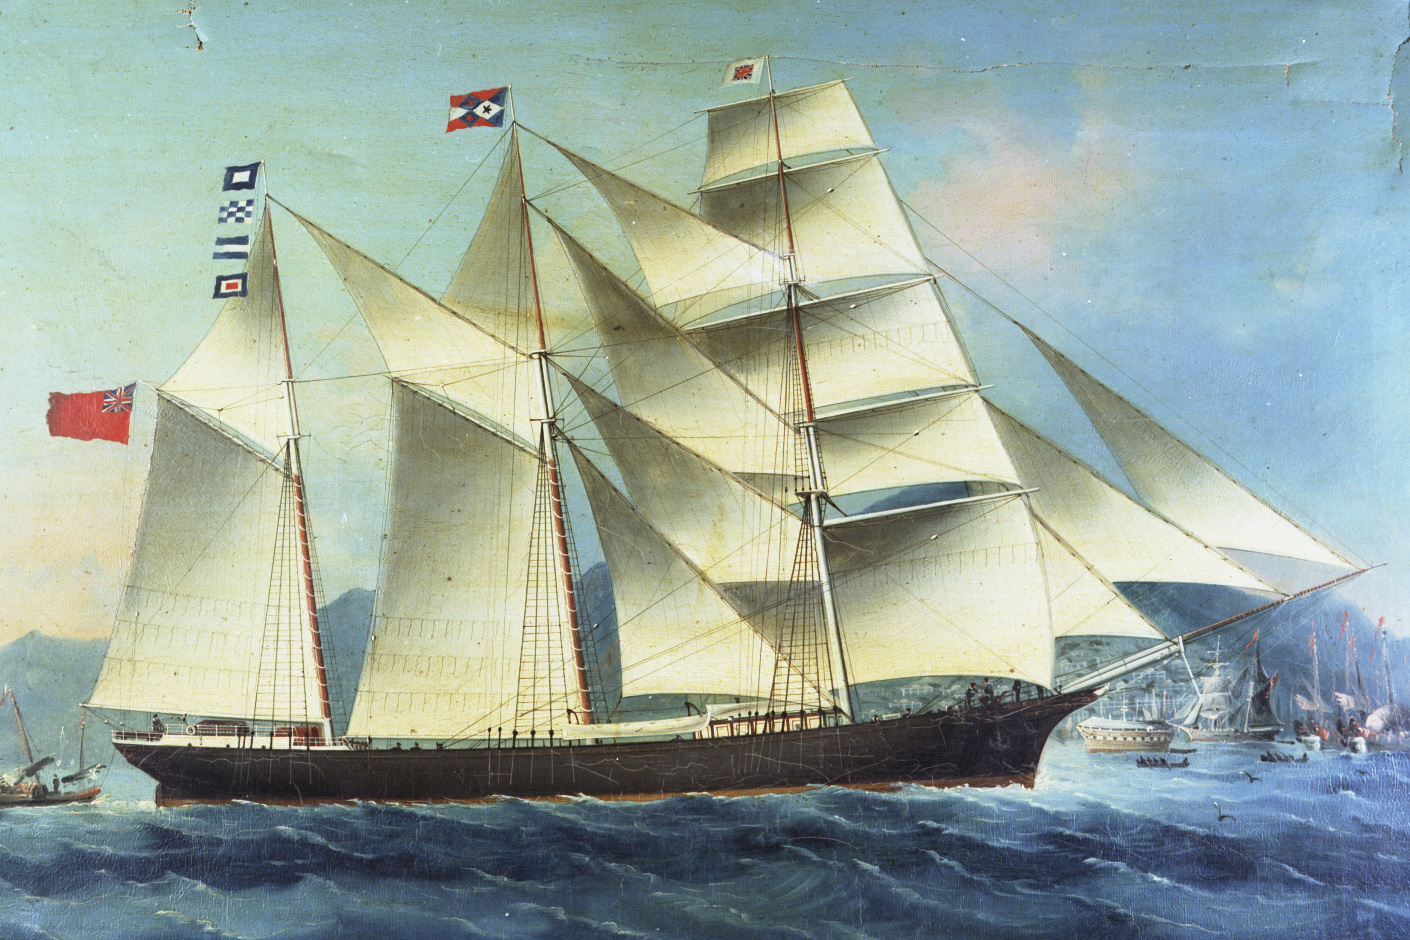 Oil painting of the schooner 'Rosebud' at Hong Kong.